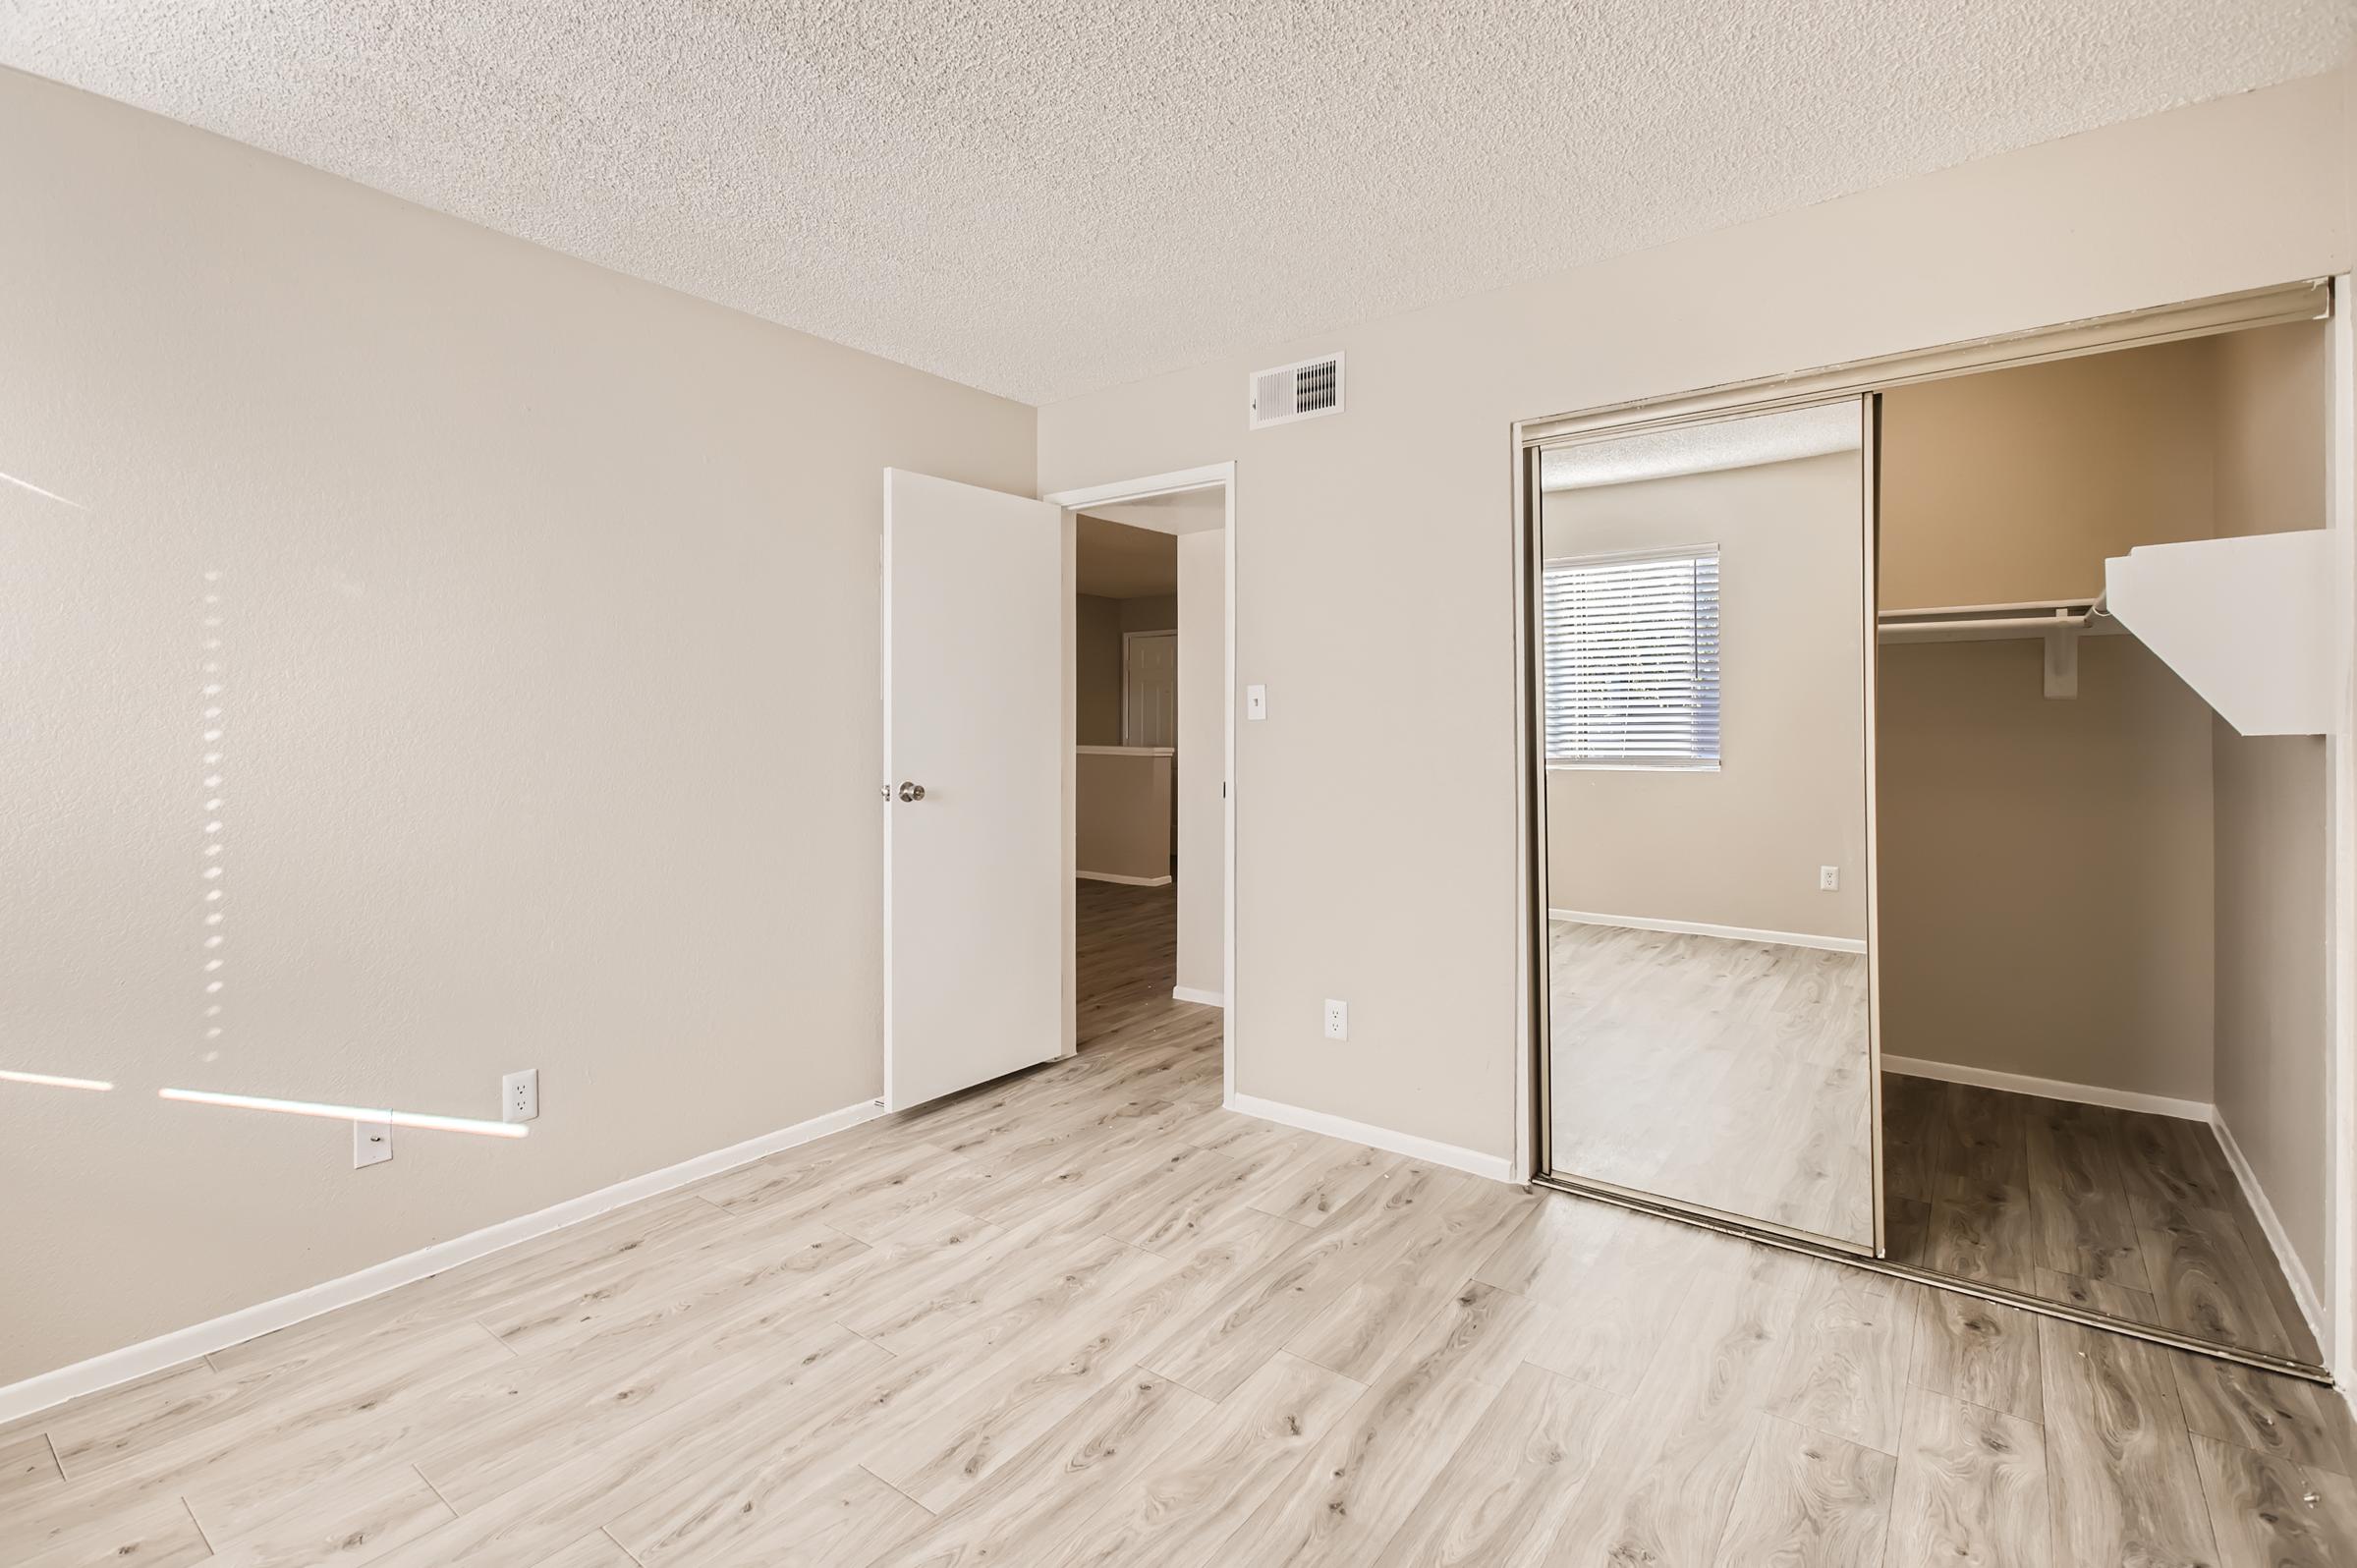 Phoenix, AZ apartment bedroom with beige walls, hardwood floors and a mirrired door to the closet